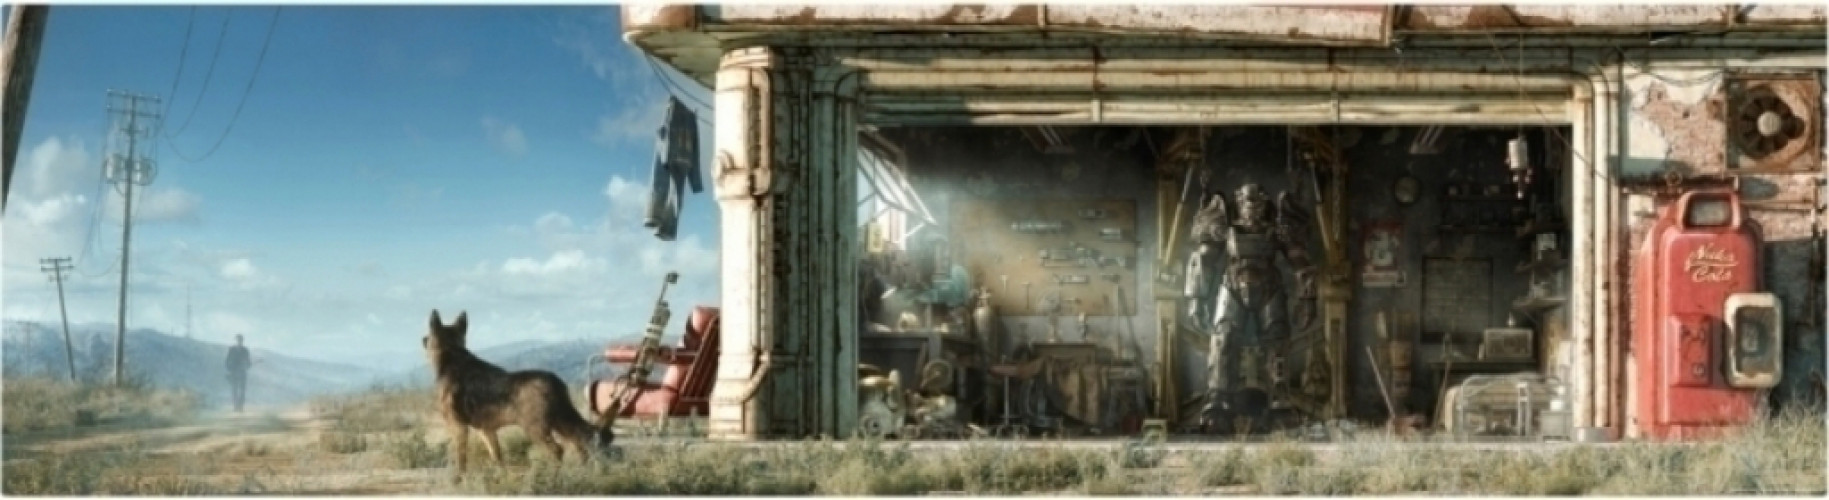 Image of Fallout - Wall Wrap Garage Scene